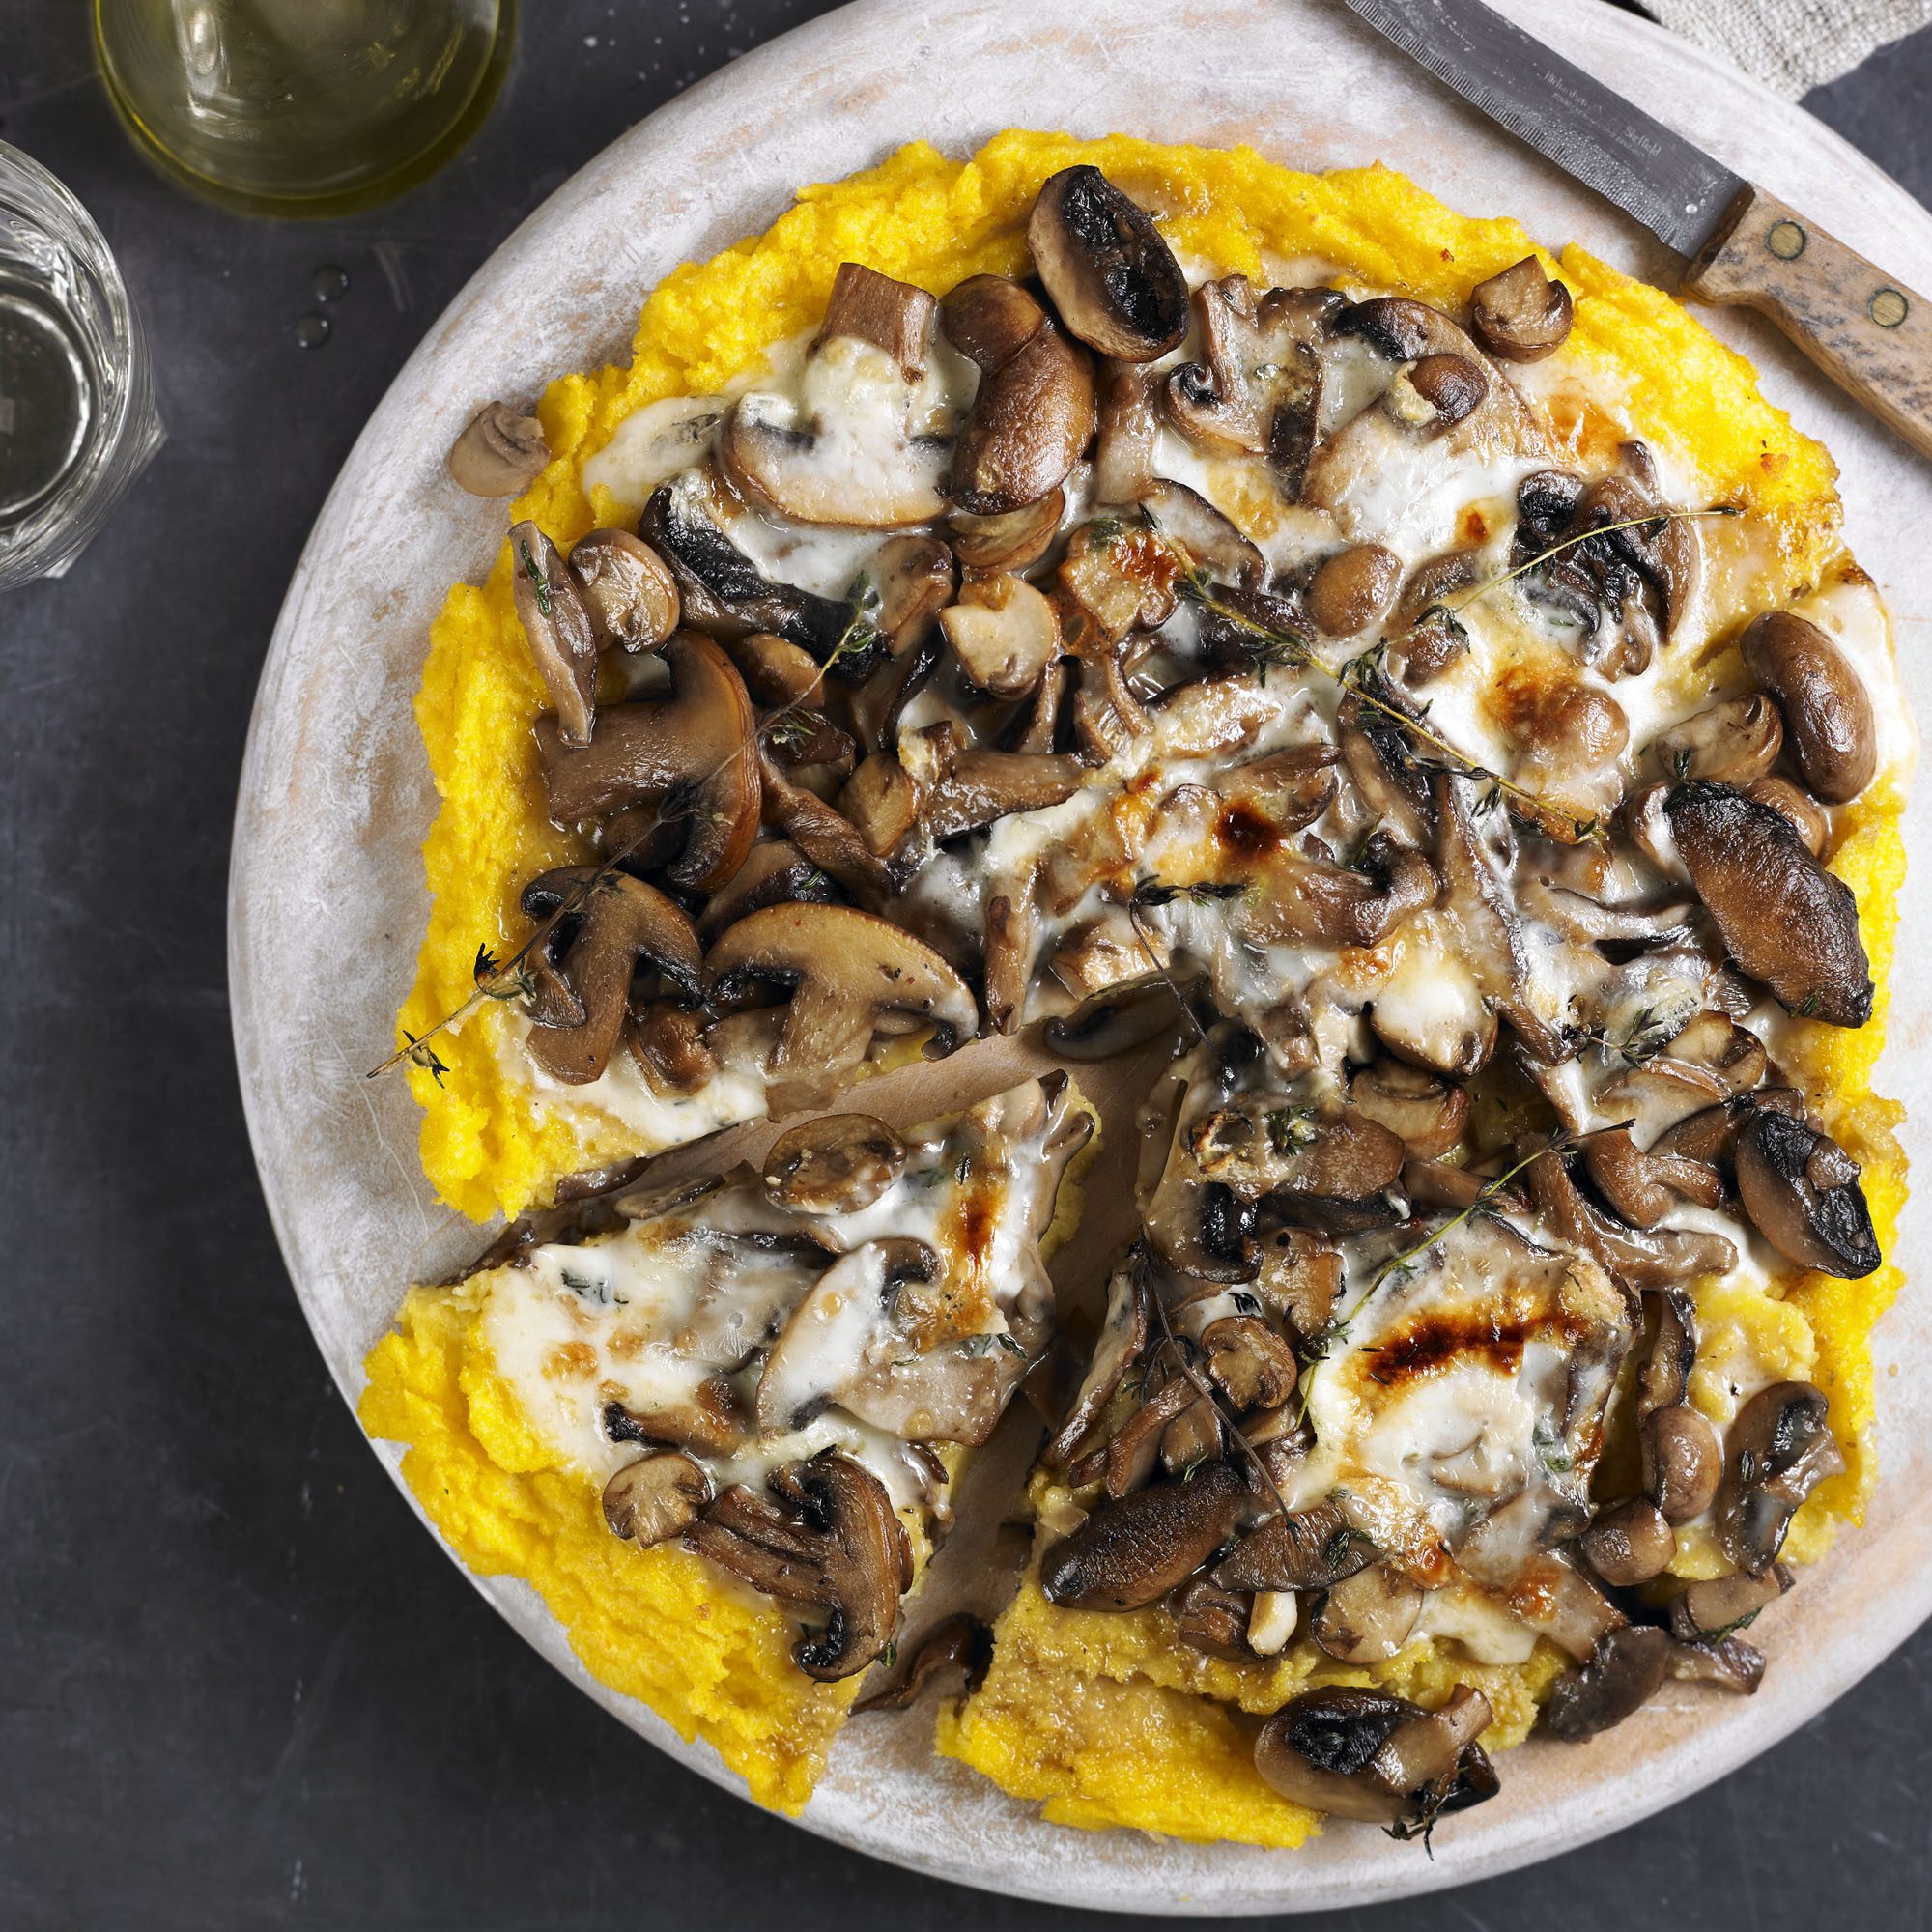 Wild mushroom and Parmesan polenta "pizza" recipe